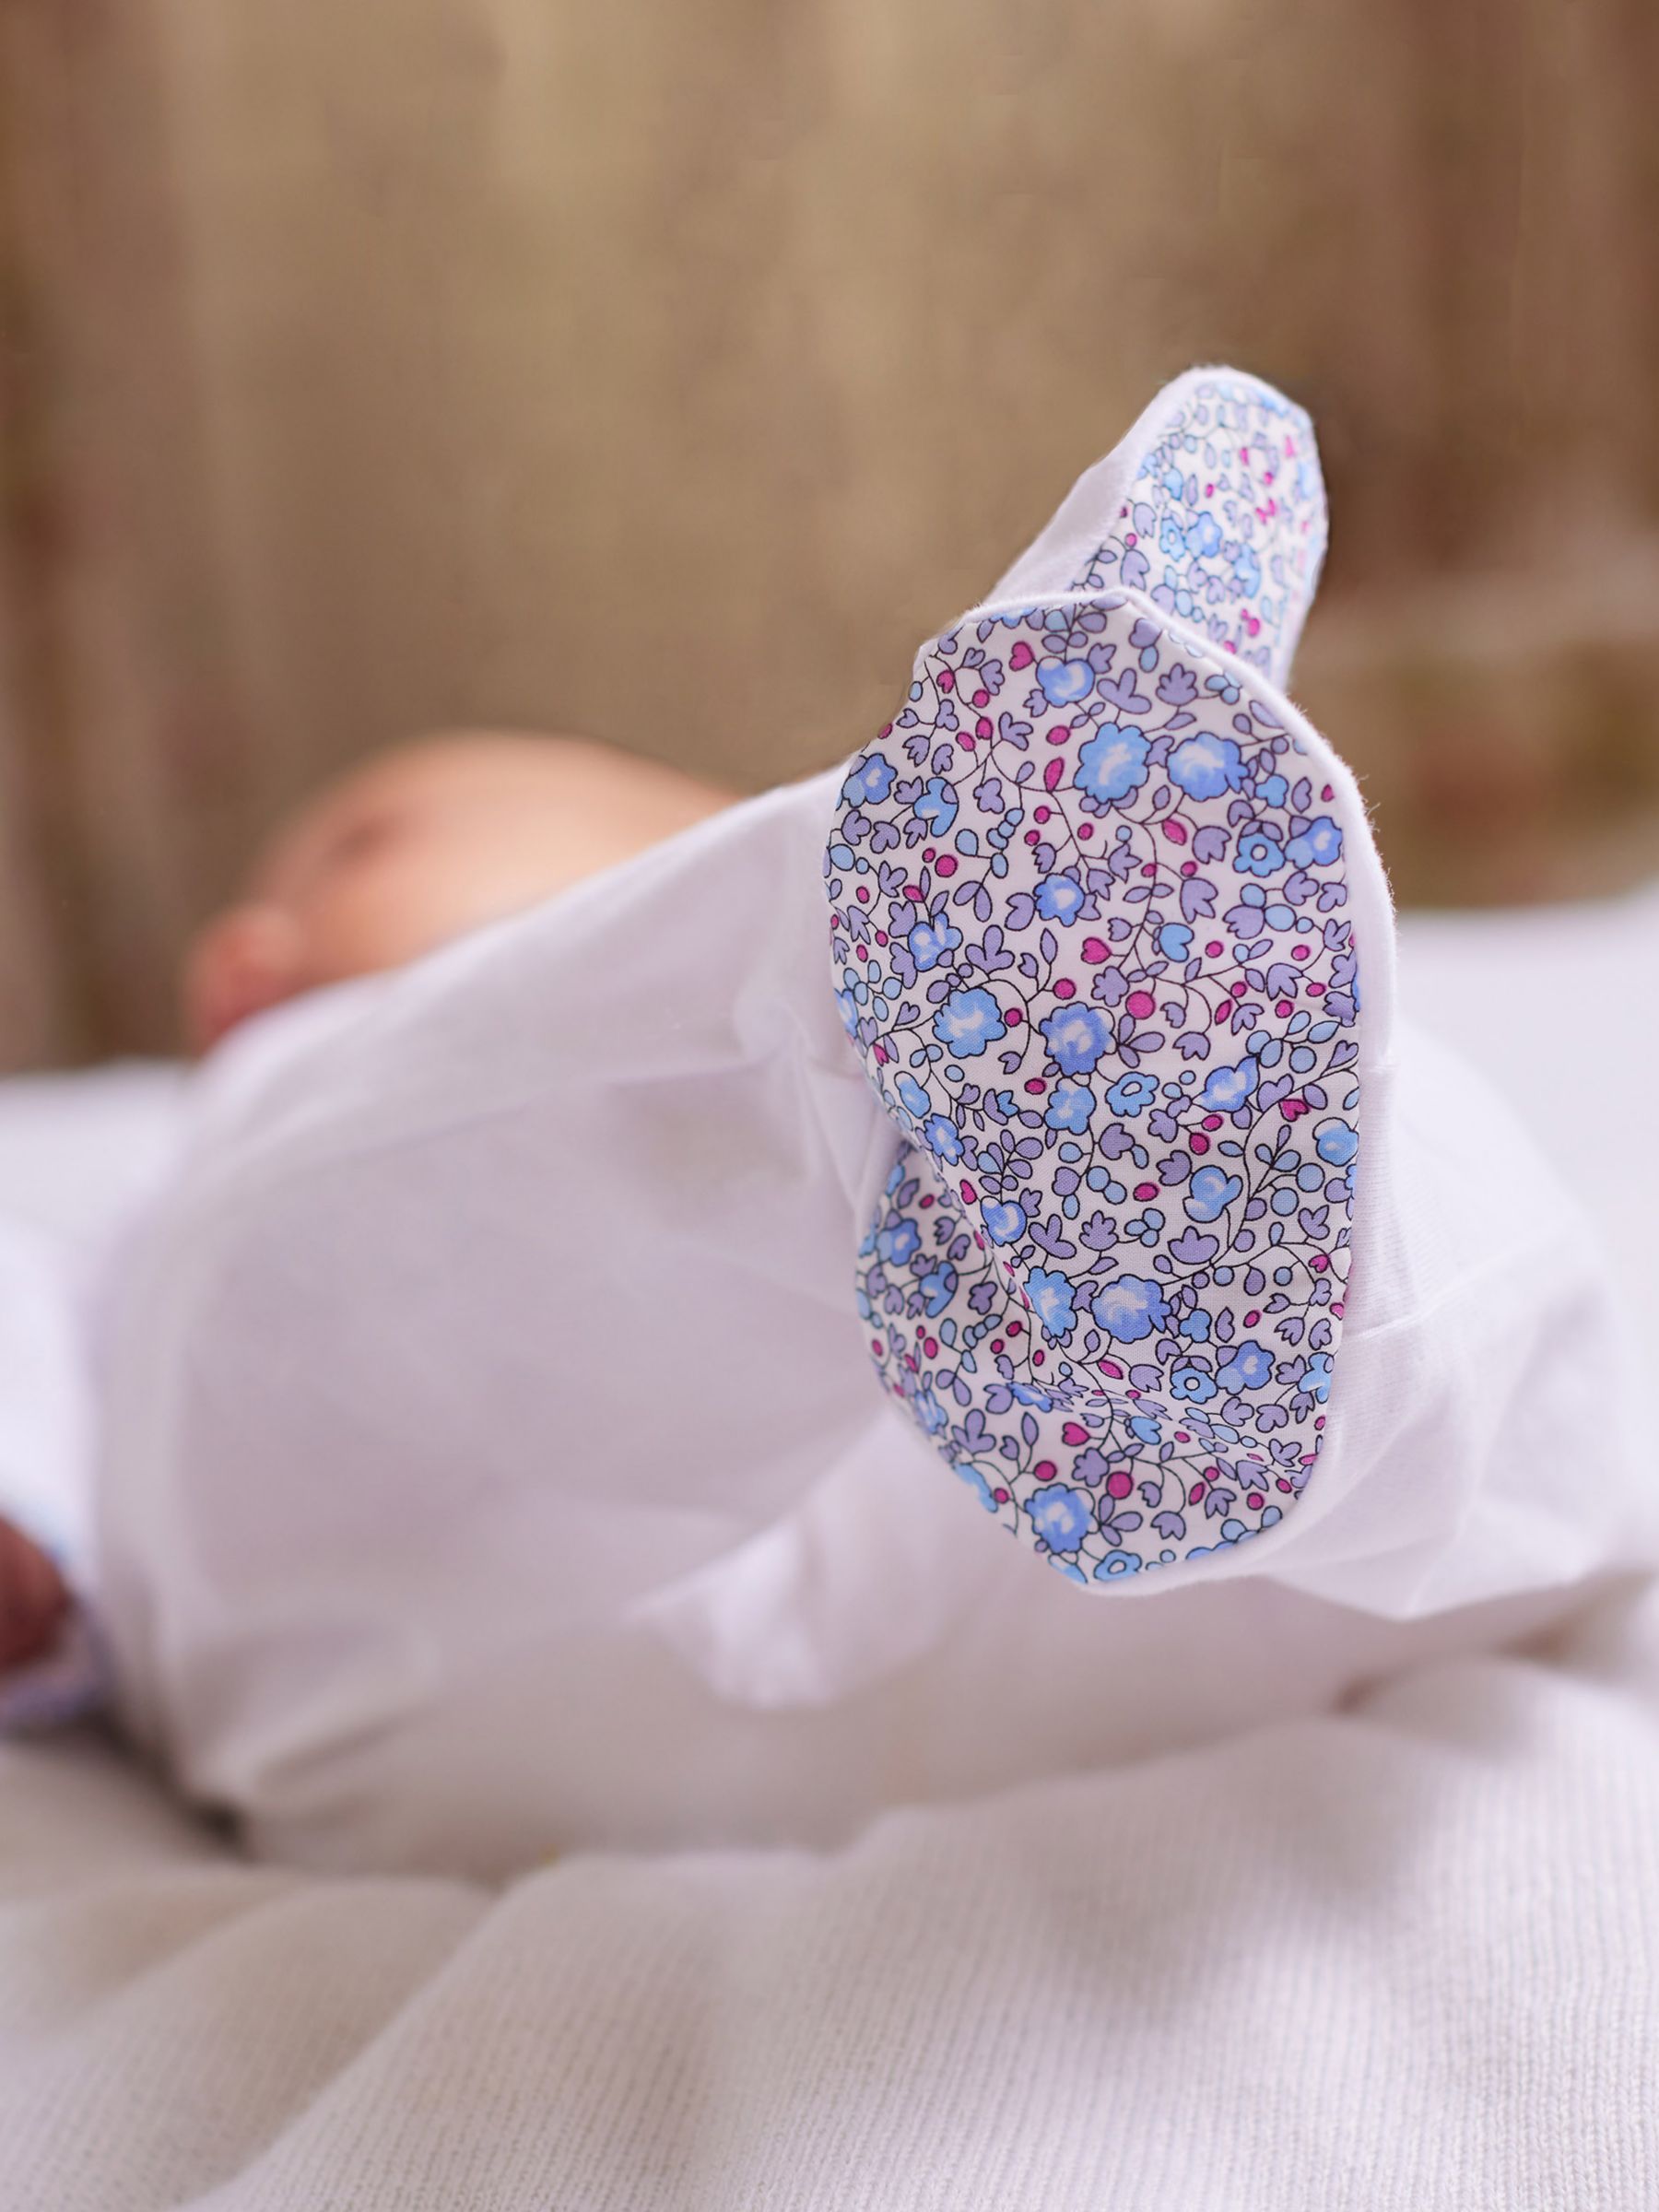 Trotters Baby Liberty Print Flopsy Eloise Sleepsuit & Gift Bag Set, White, Newborn